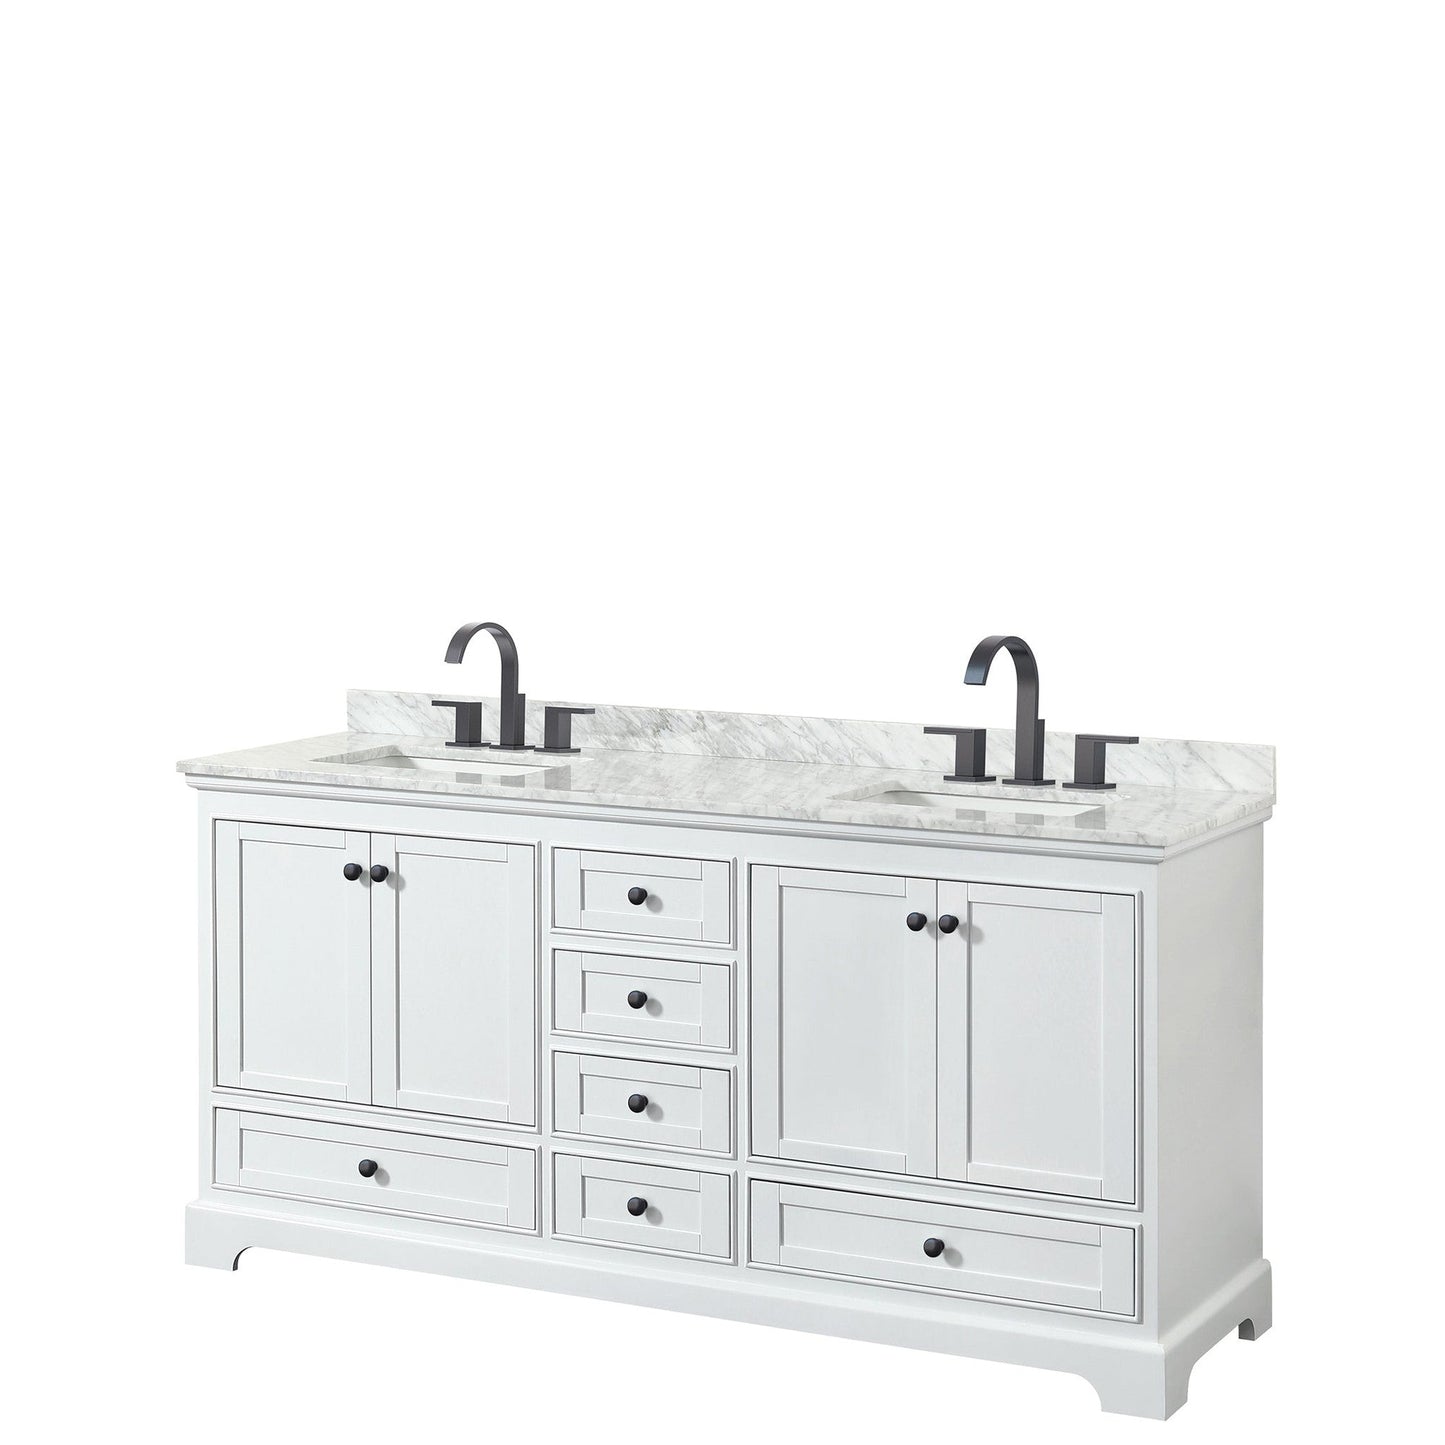 Deborah 72" Double Bathroom Vanity in White, White Carrara Marble Countertop, Undermount Square Sinks, Matte Black Trim